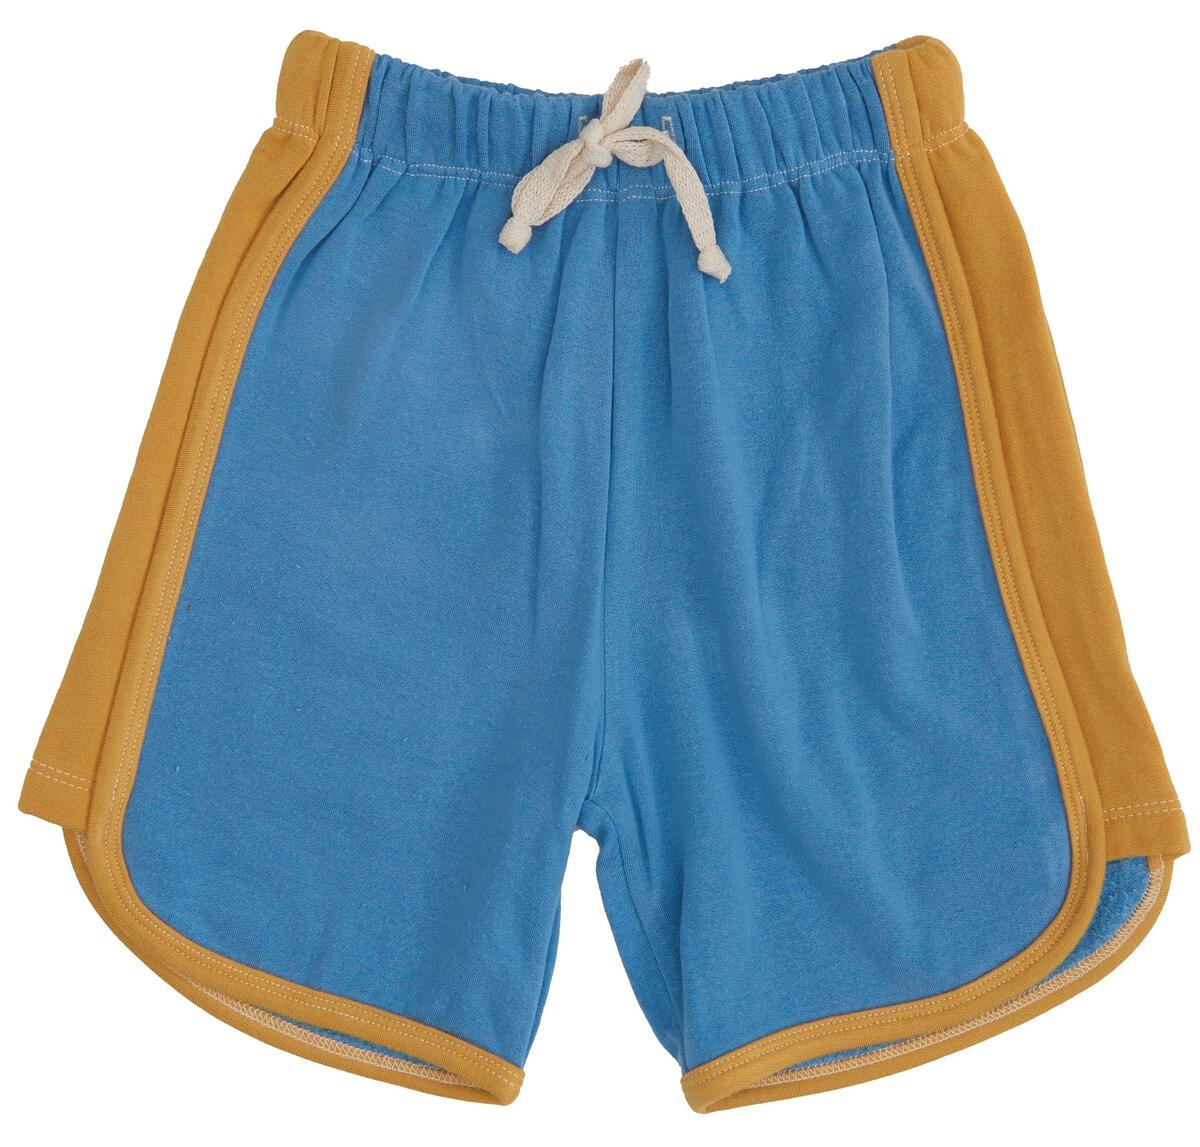 Malibu Short - Deck